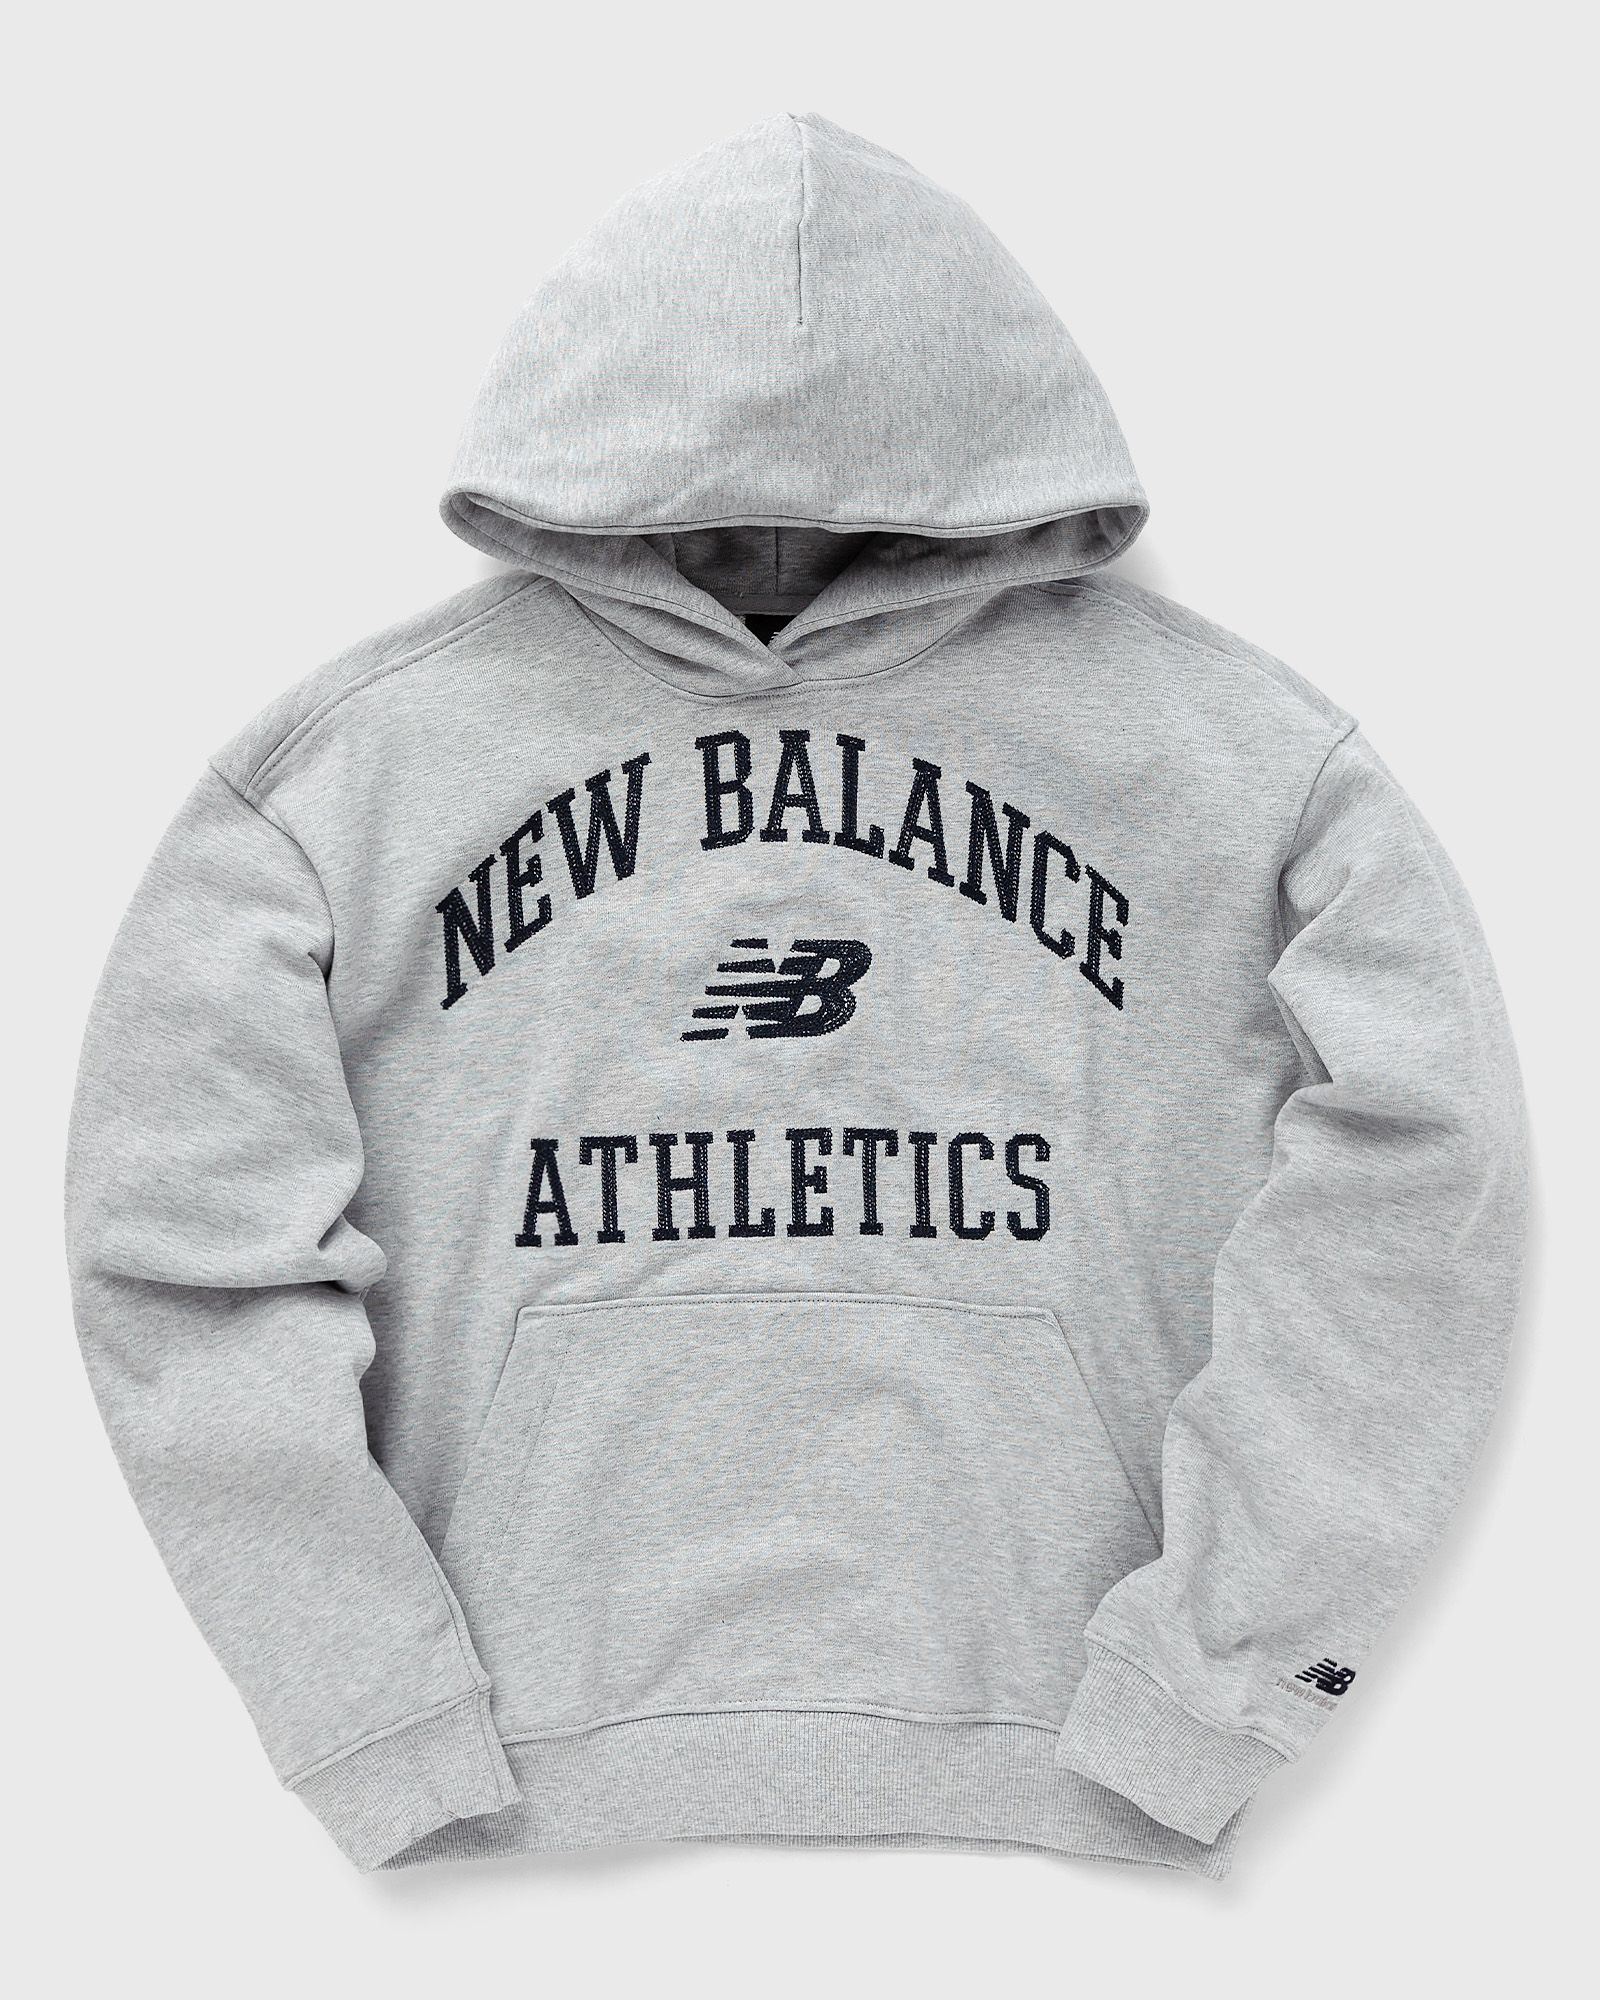 New Balance - athletics varsity oversized fleece hoodie women hoodies grey in größe:s